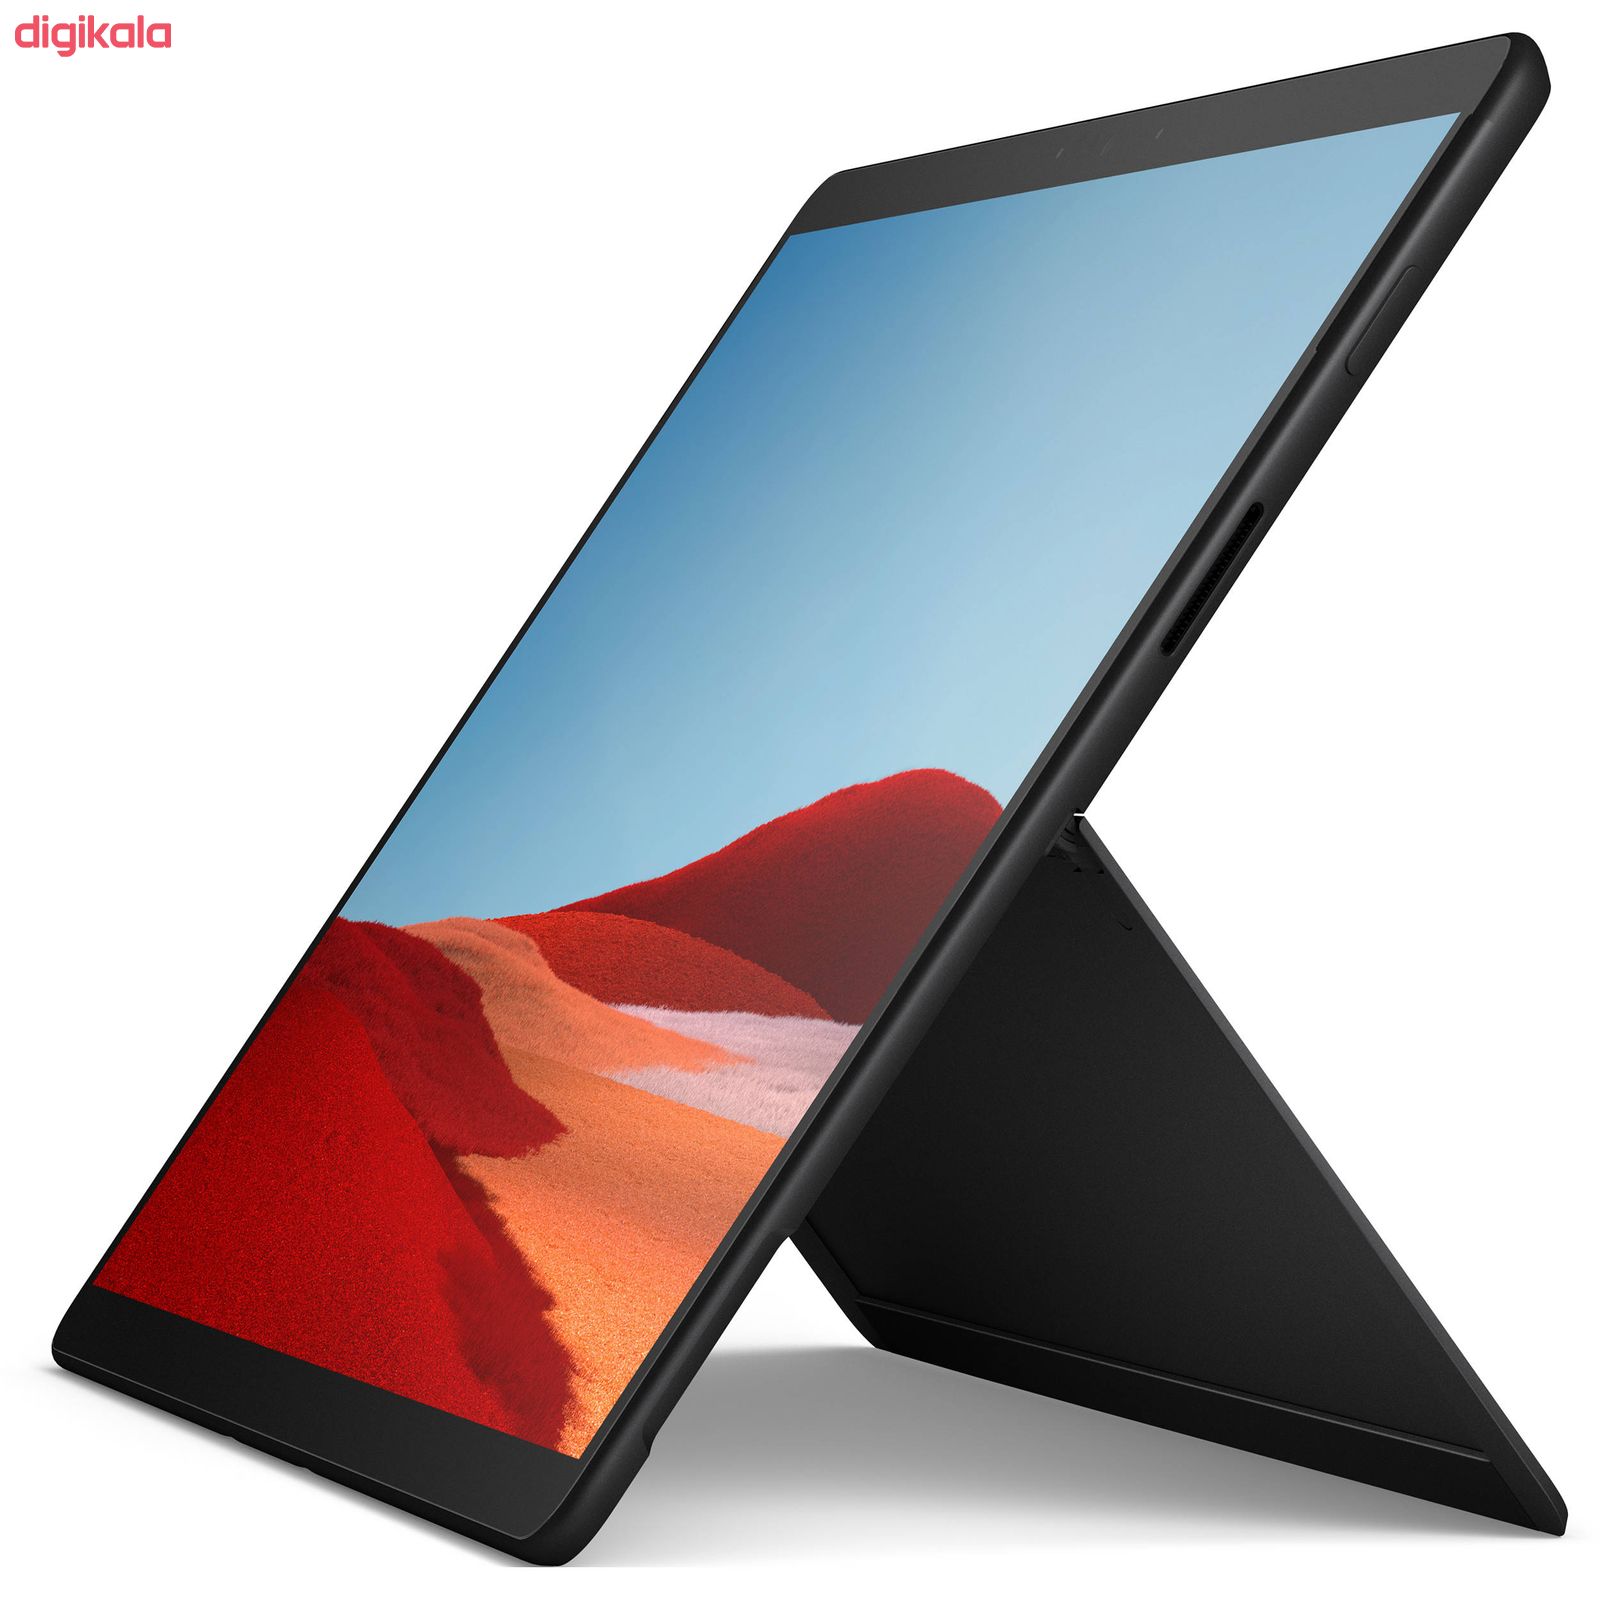 تبلت مایکروسافت مدل Surface Pro X LTE - A ظرفیت 128 گیگابایت به همراه کیبورد Black Type Cover